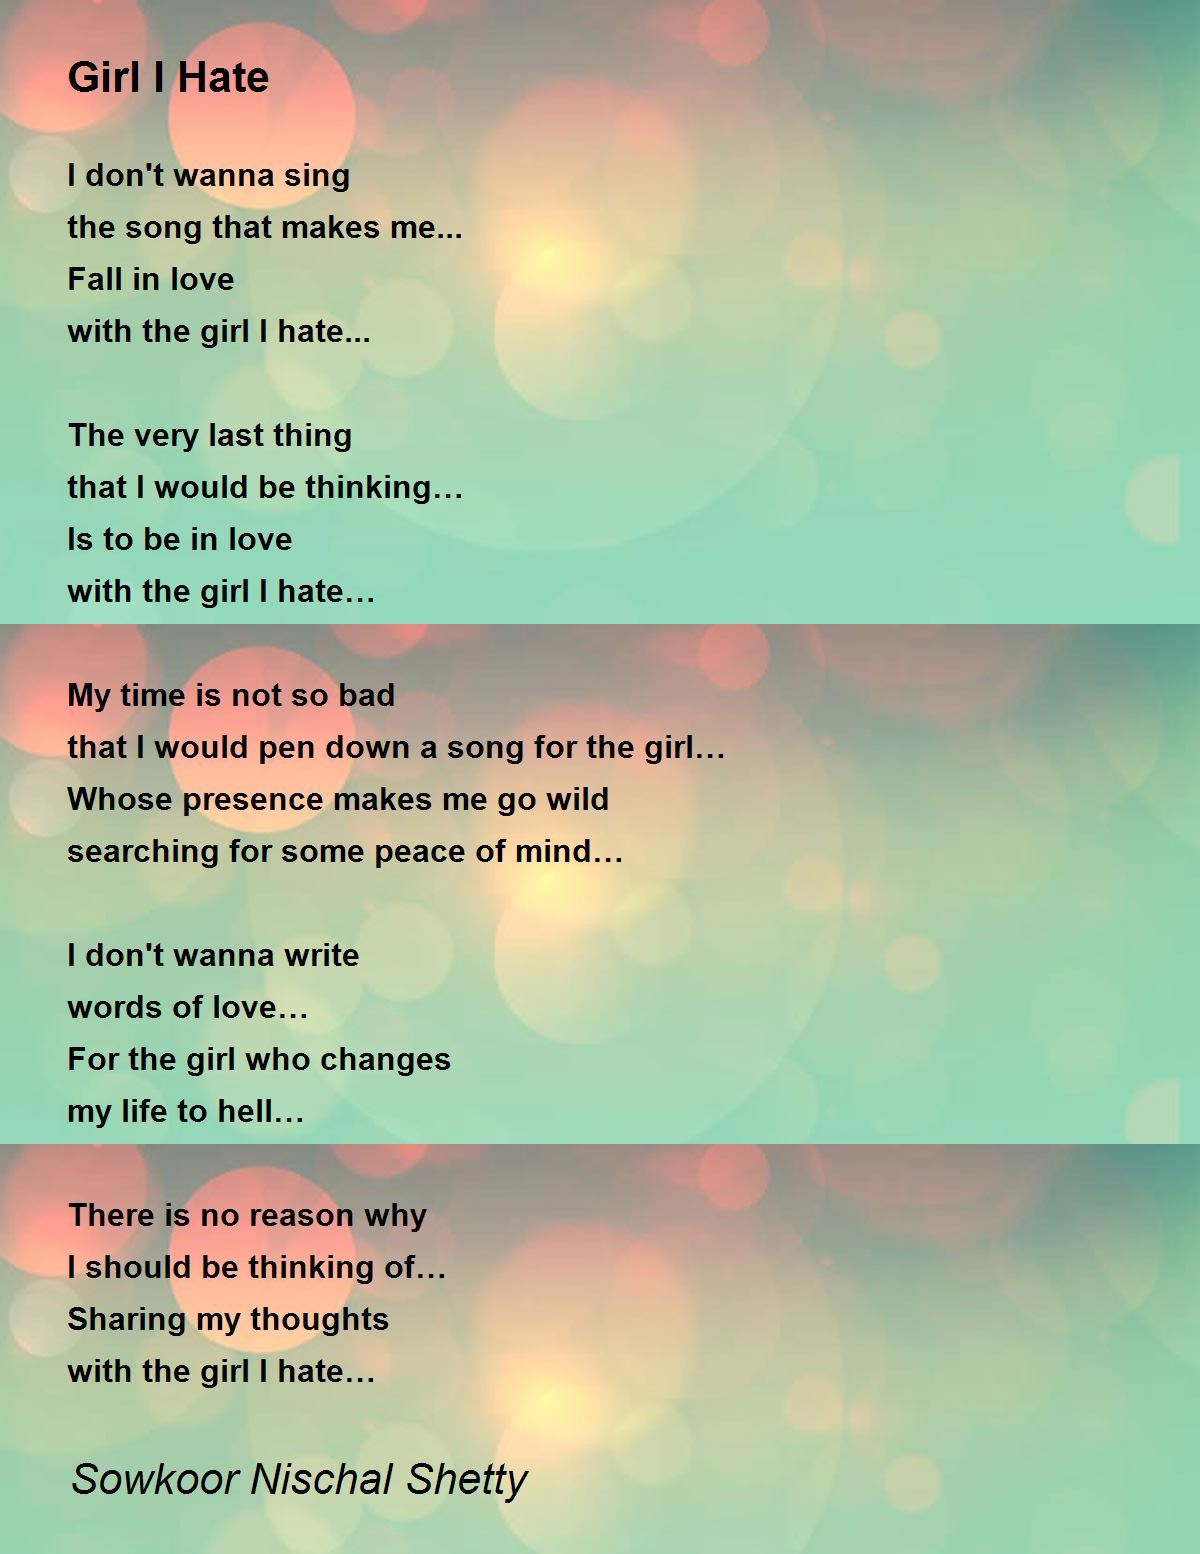 Girl I Hate - Girl I Hate Poem by Sowkoor Nischal Shetty